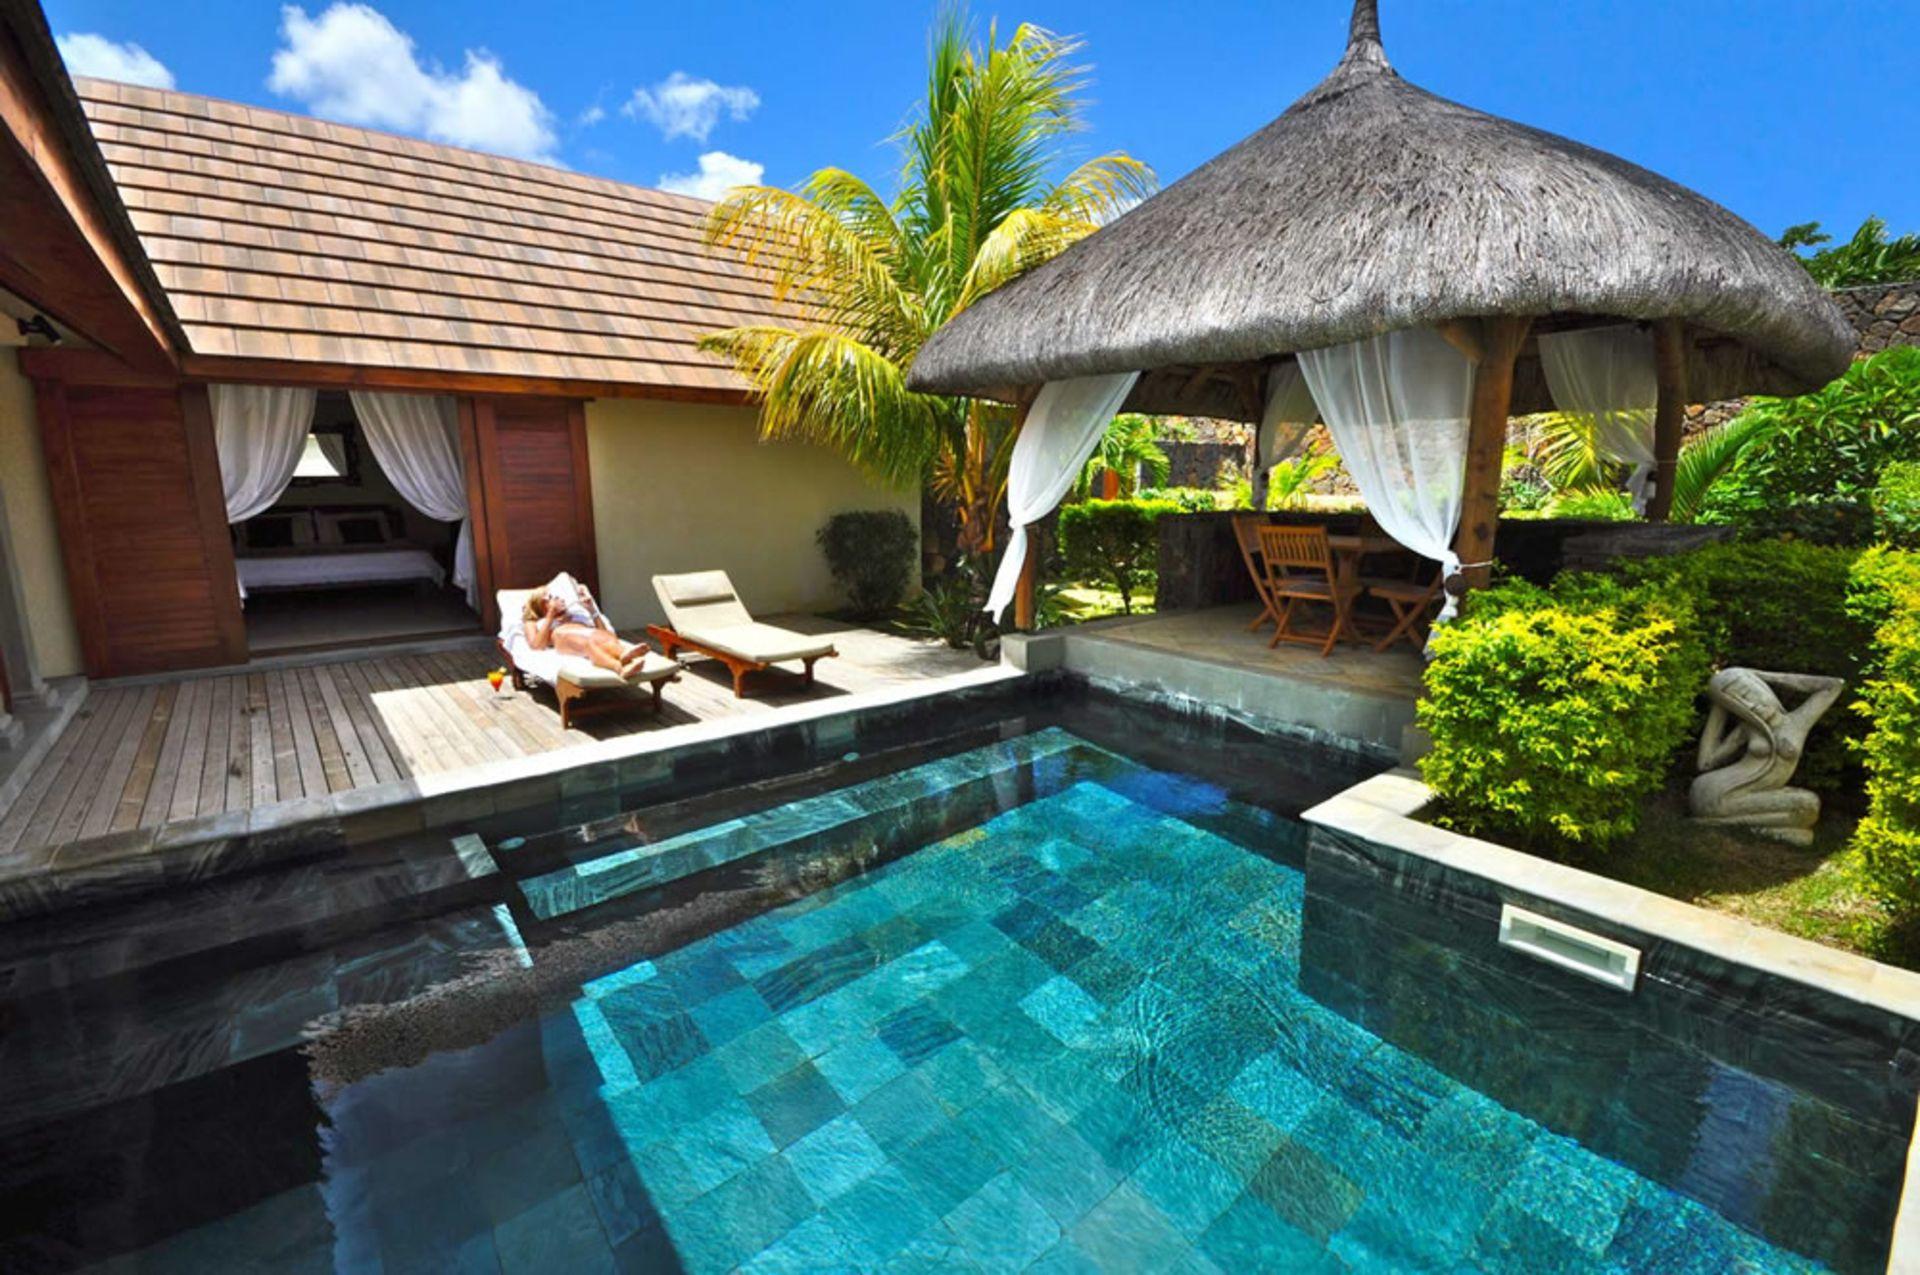 Ferienhaus mit Privatpool für 2 Personen  + 2 Ferienhaus auf Mauritius